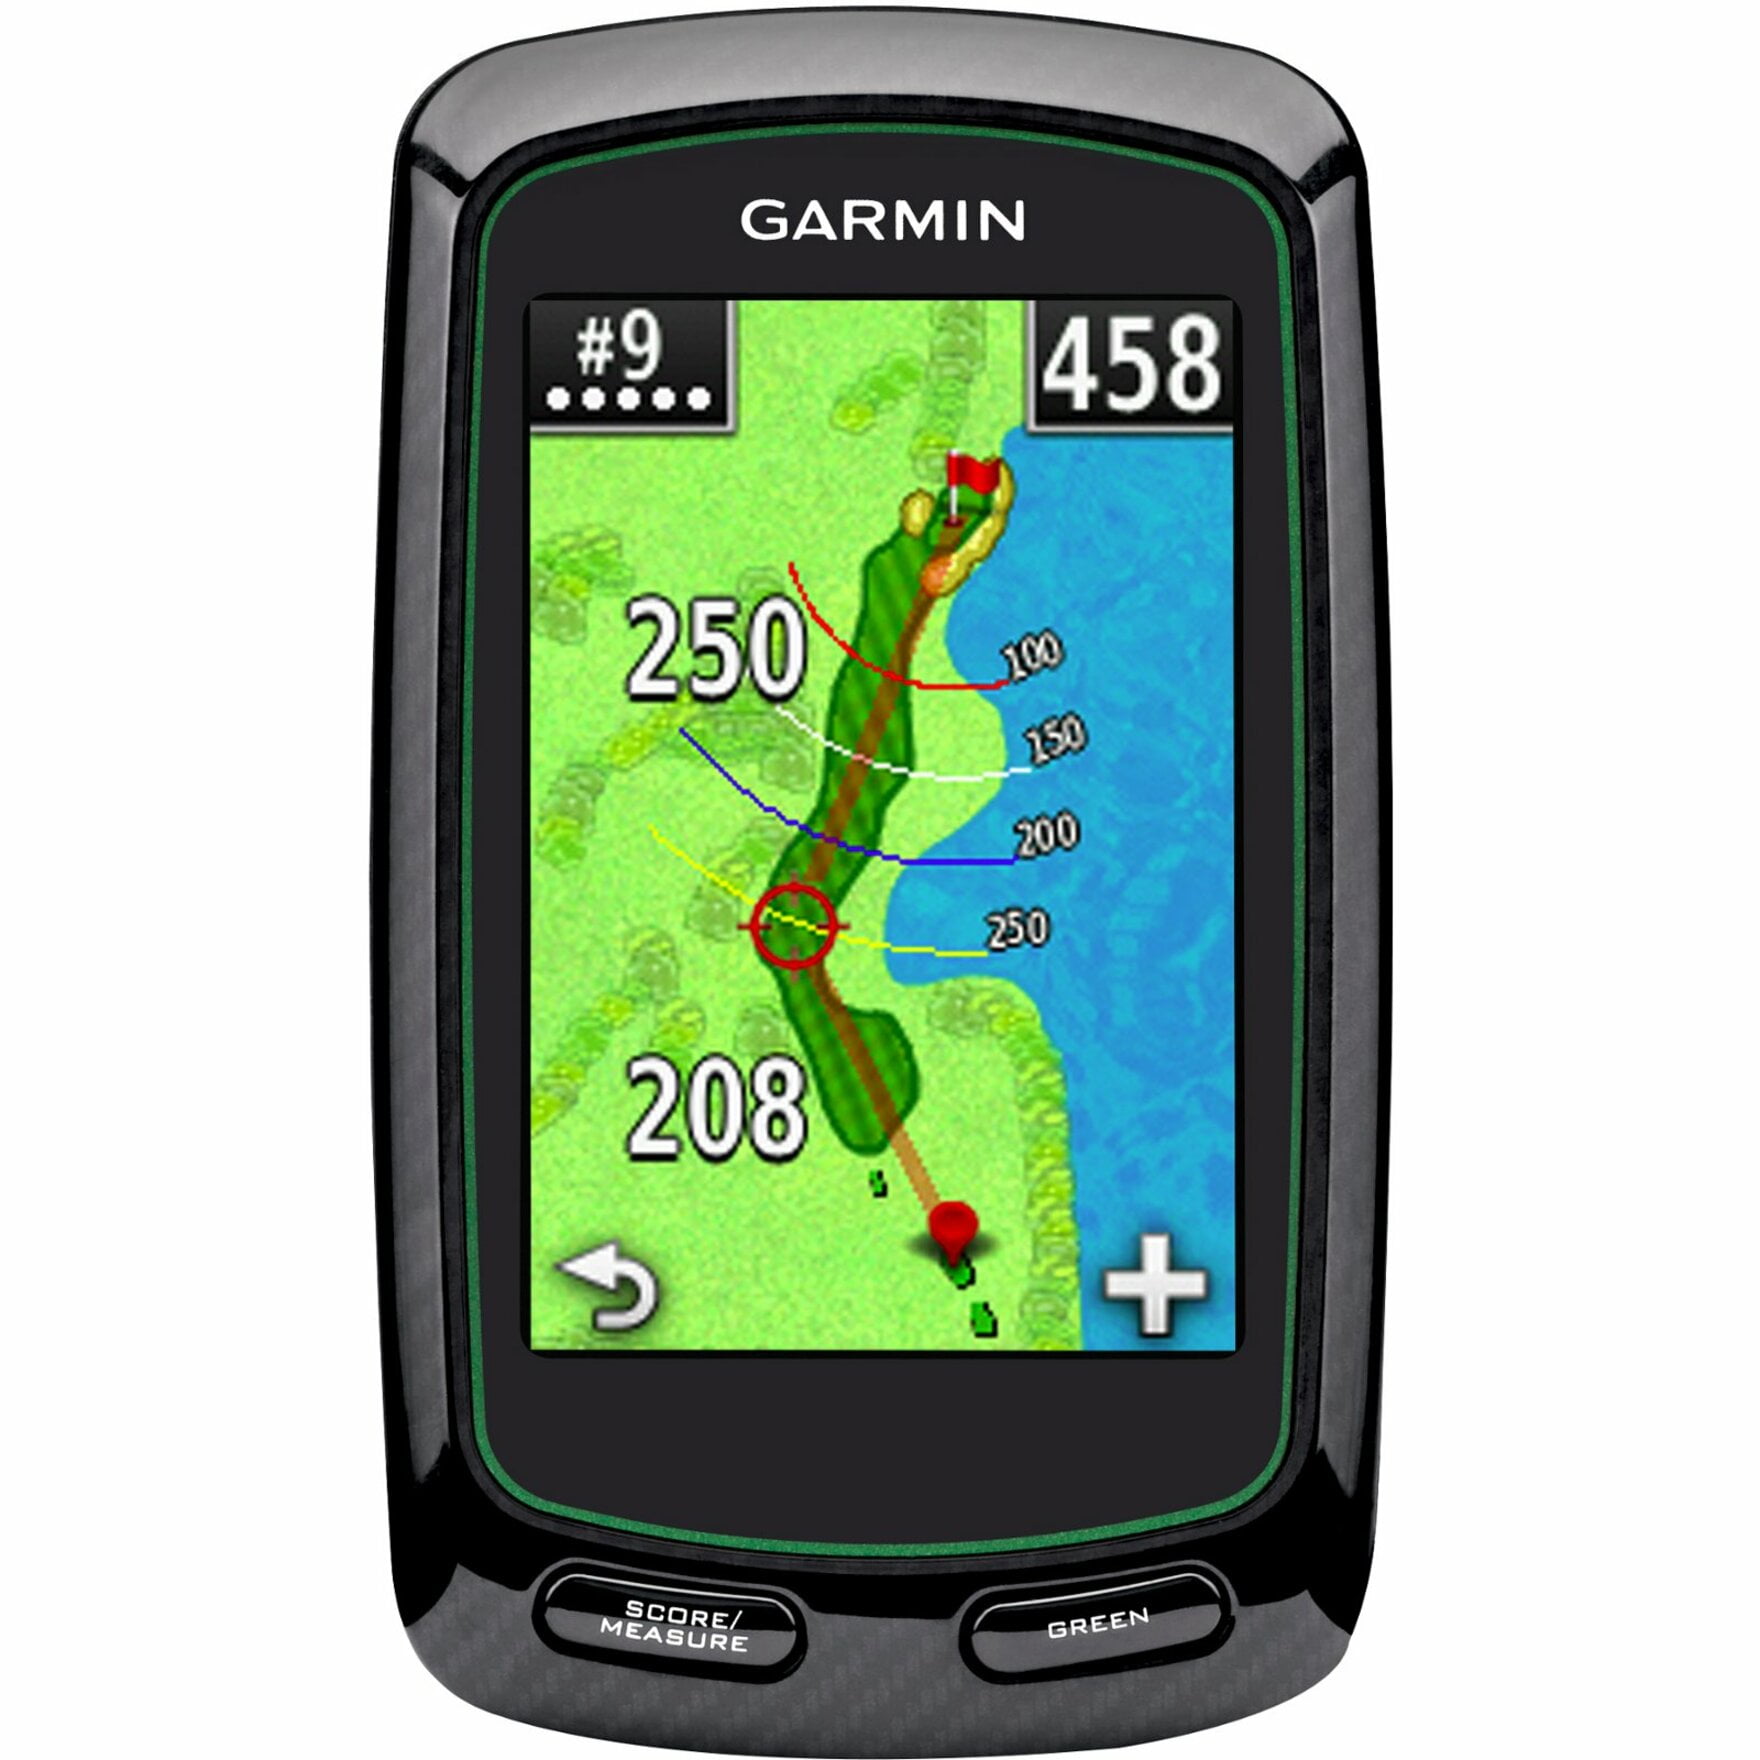 Garmin Golf GPS Navigator - Walmart.com